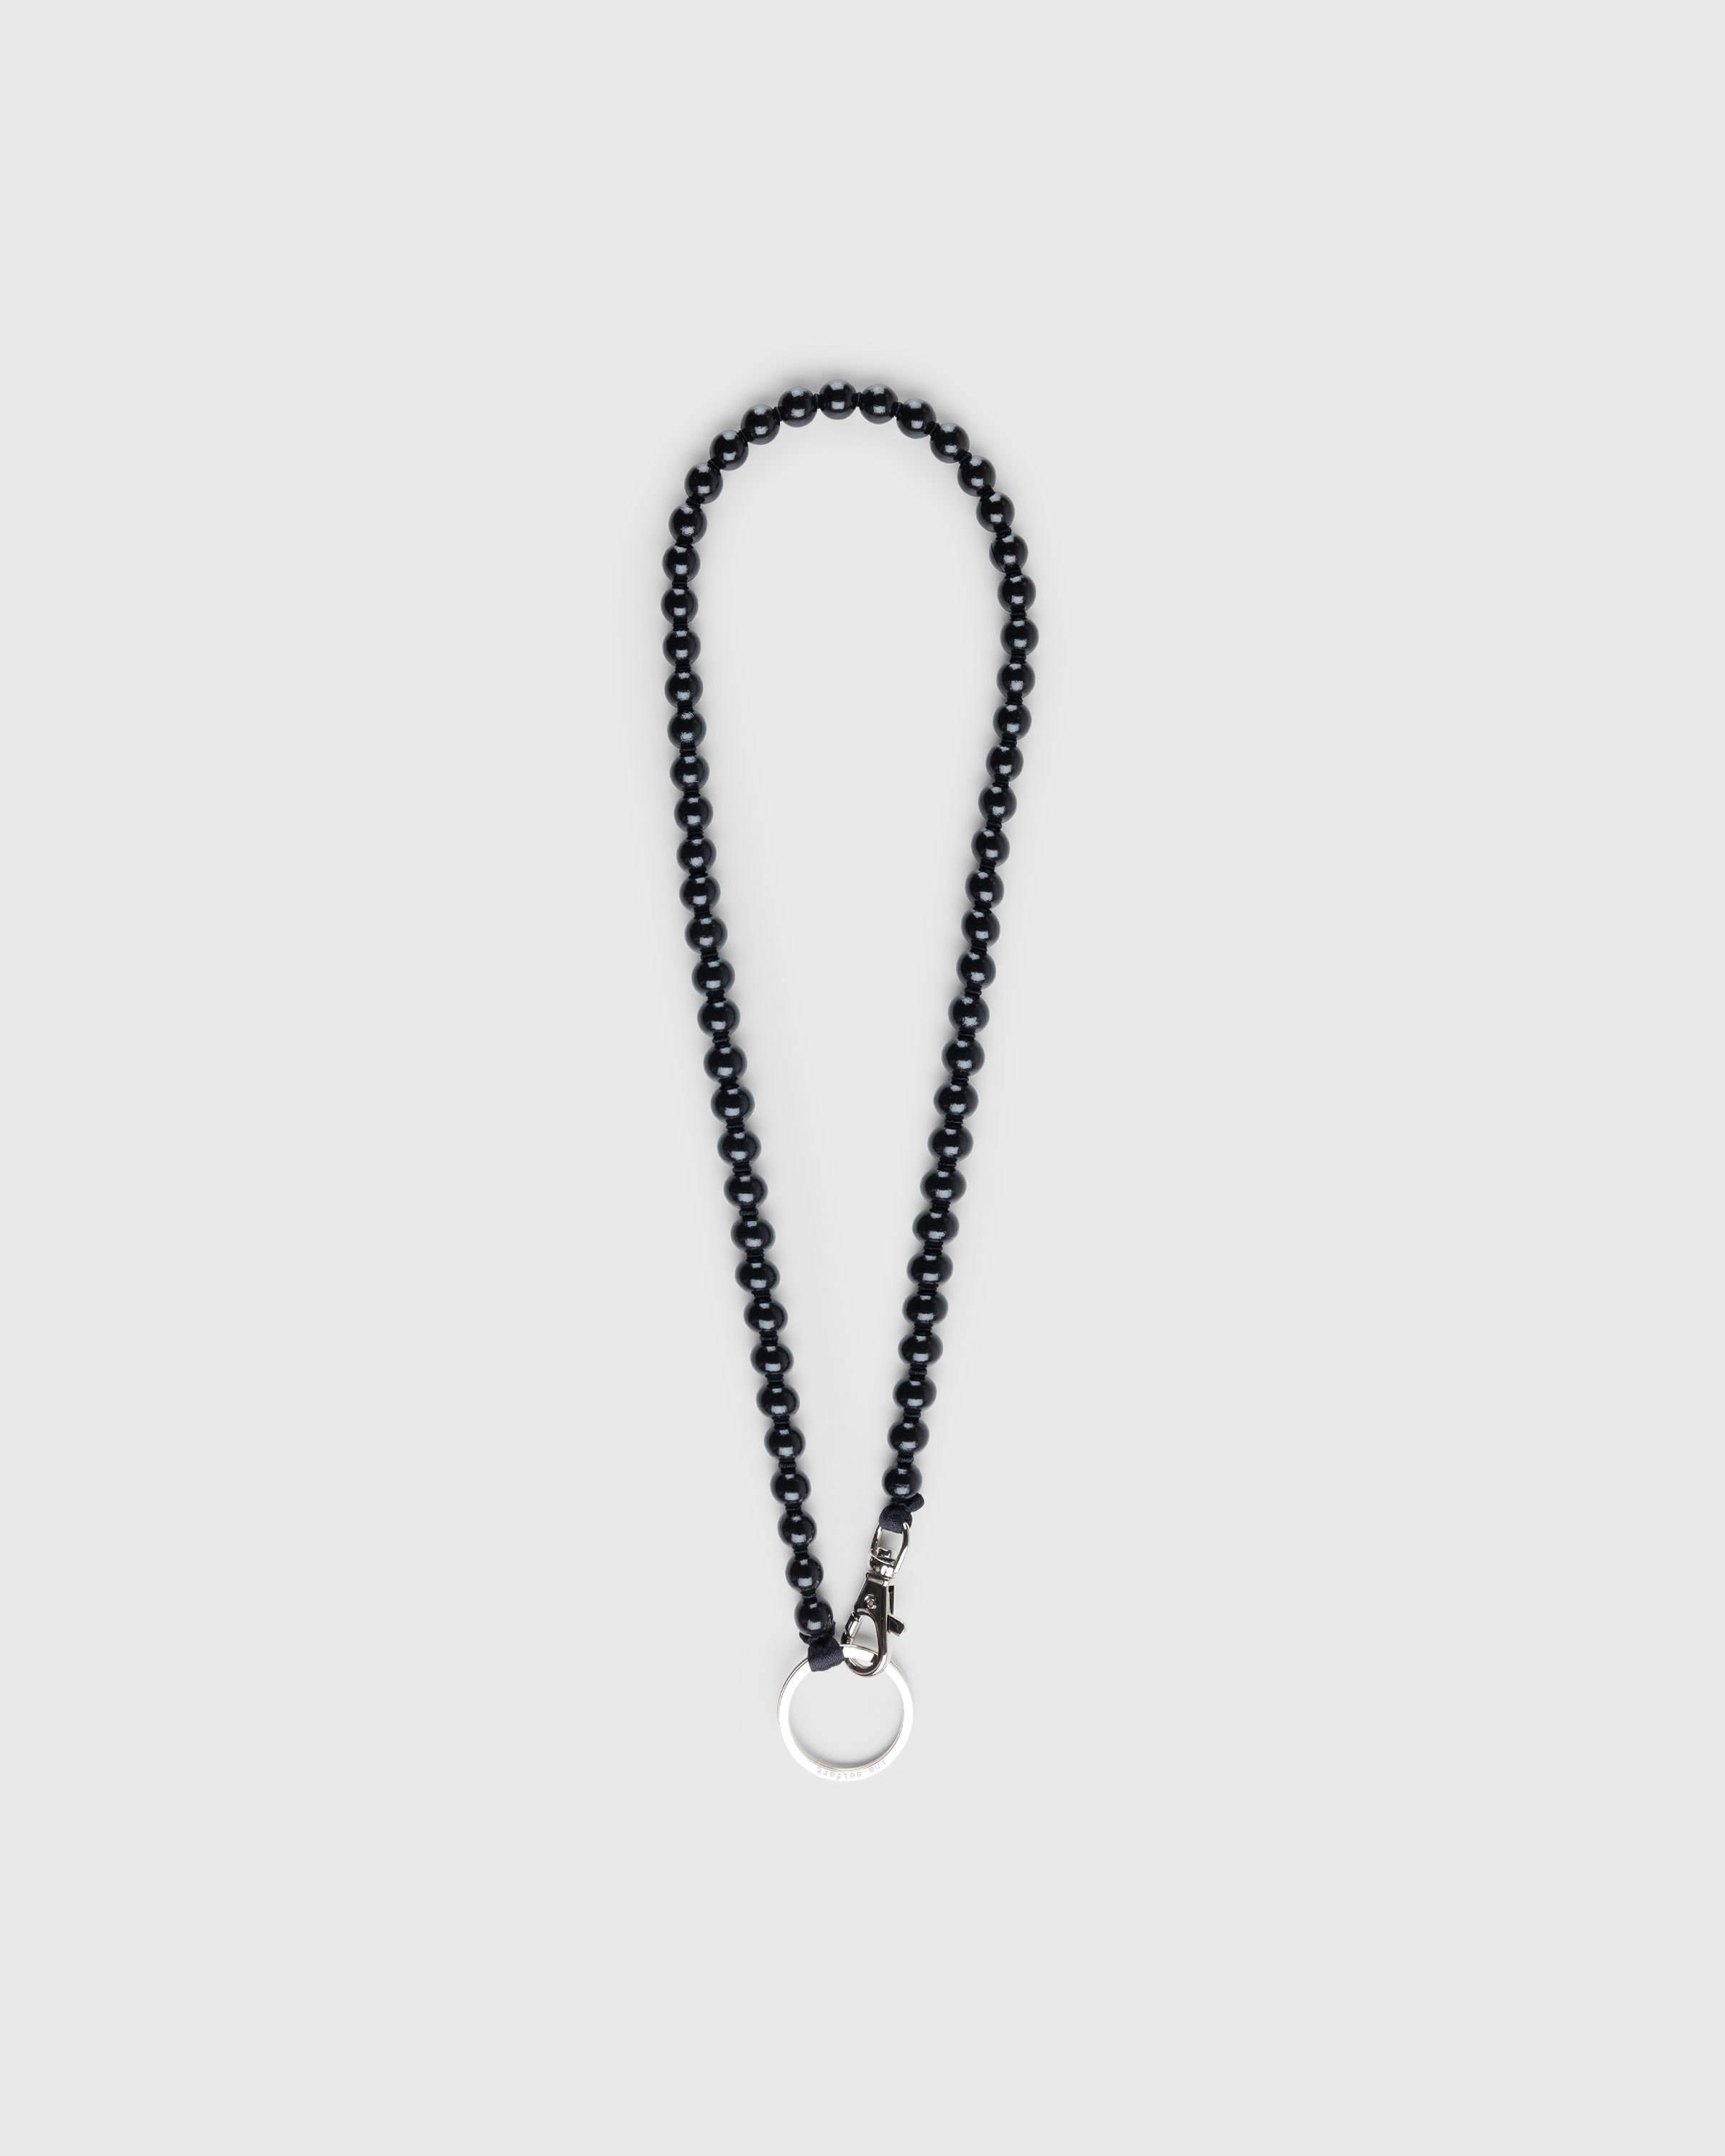 Ina Seifart – Pearl Keychain Long Black | Highsnobiety Shop